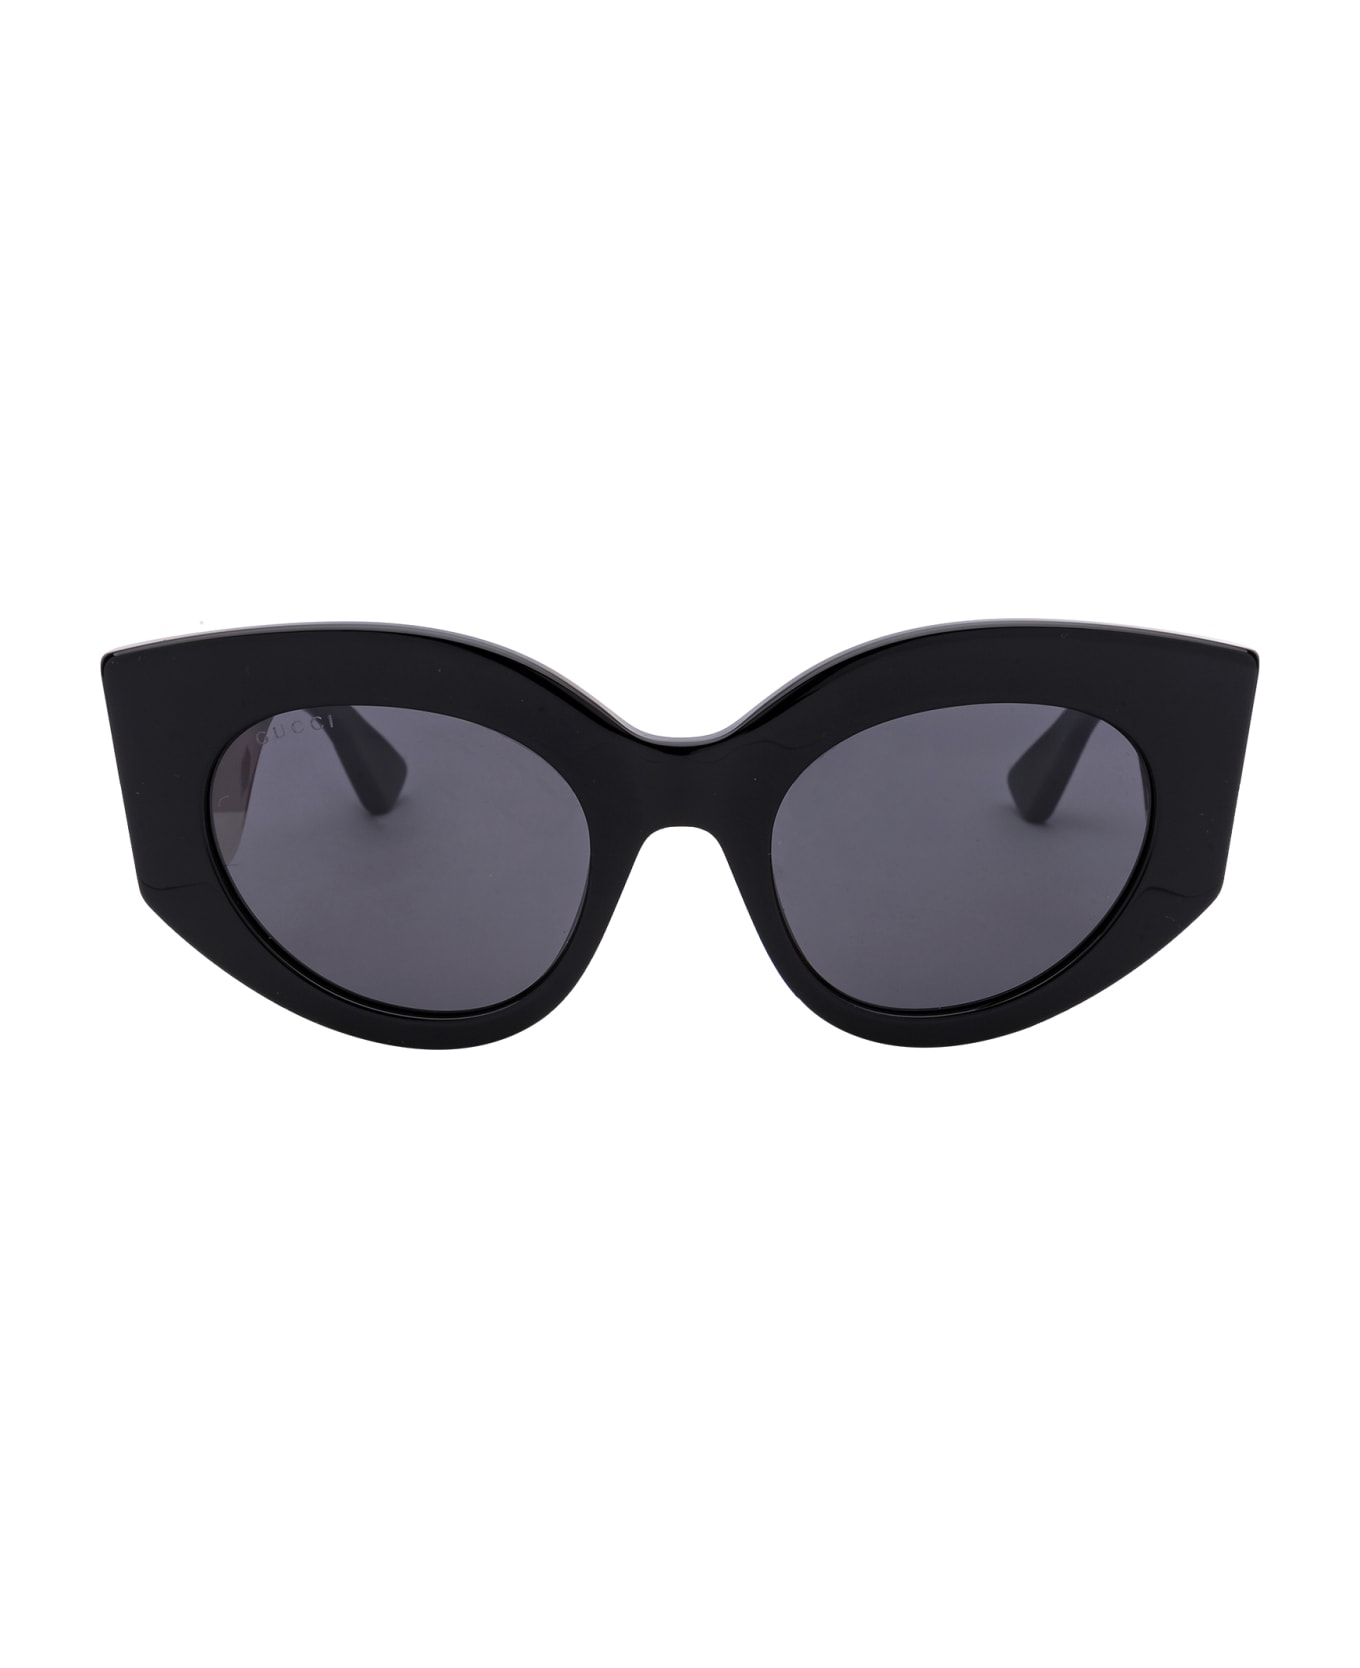 Gucci Eyewear Gg0275s Sunglasses - 001 BLACK MULTICOLOR GREY